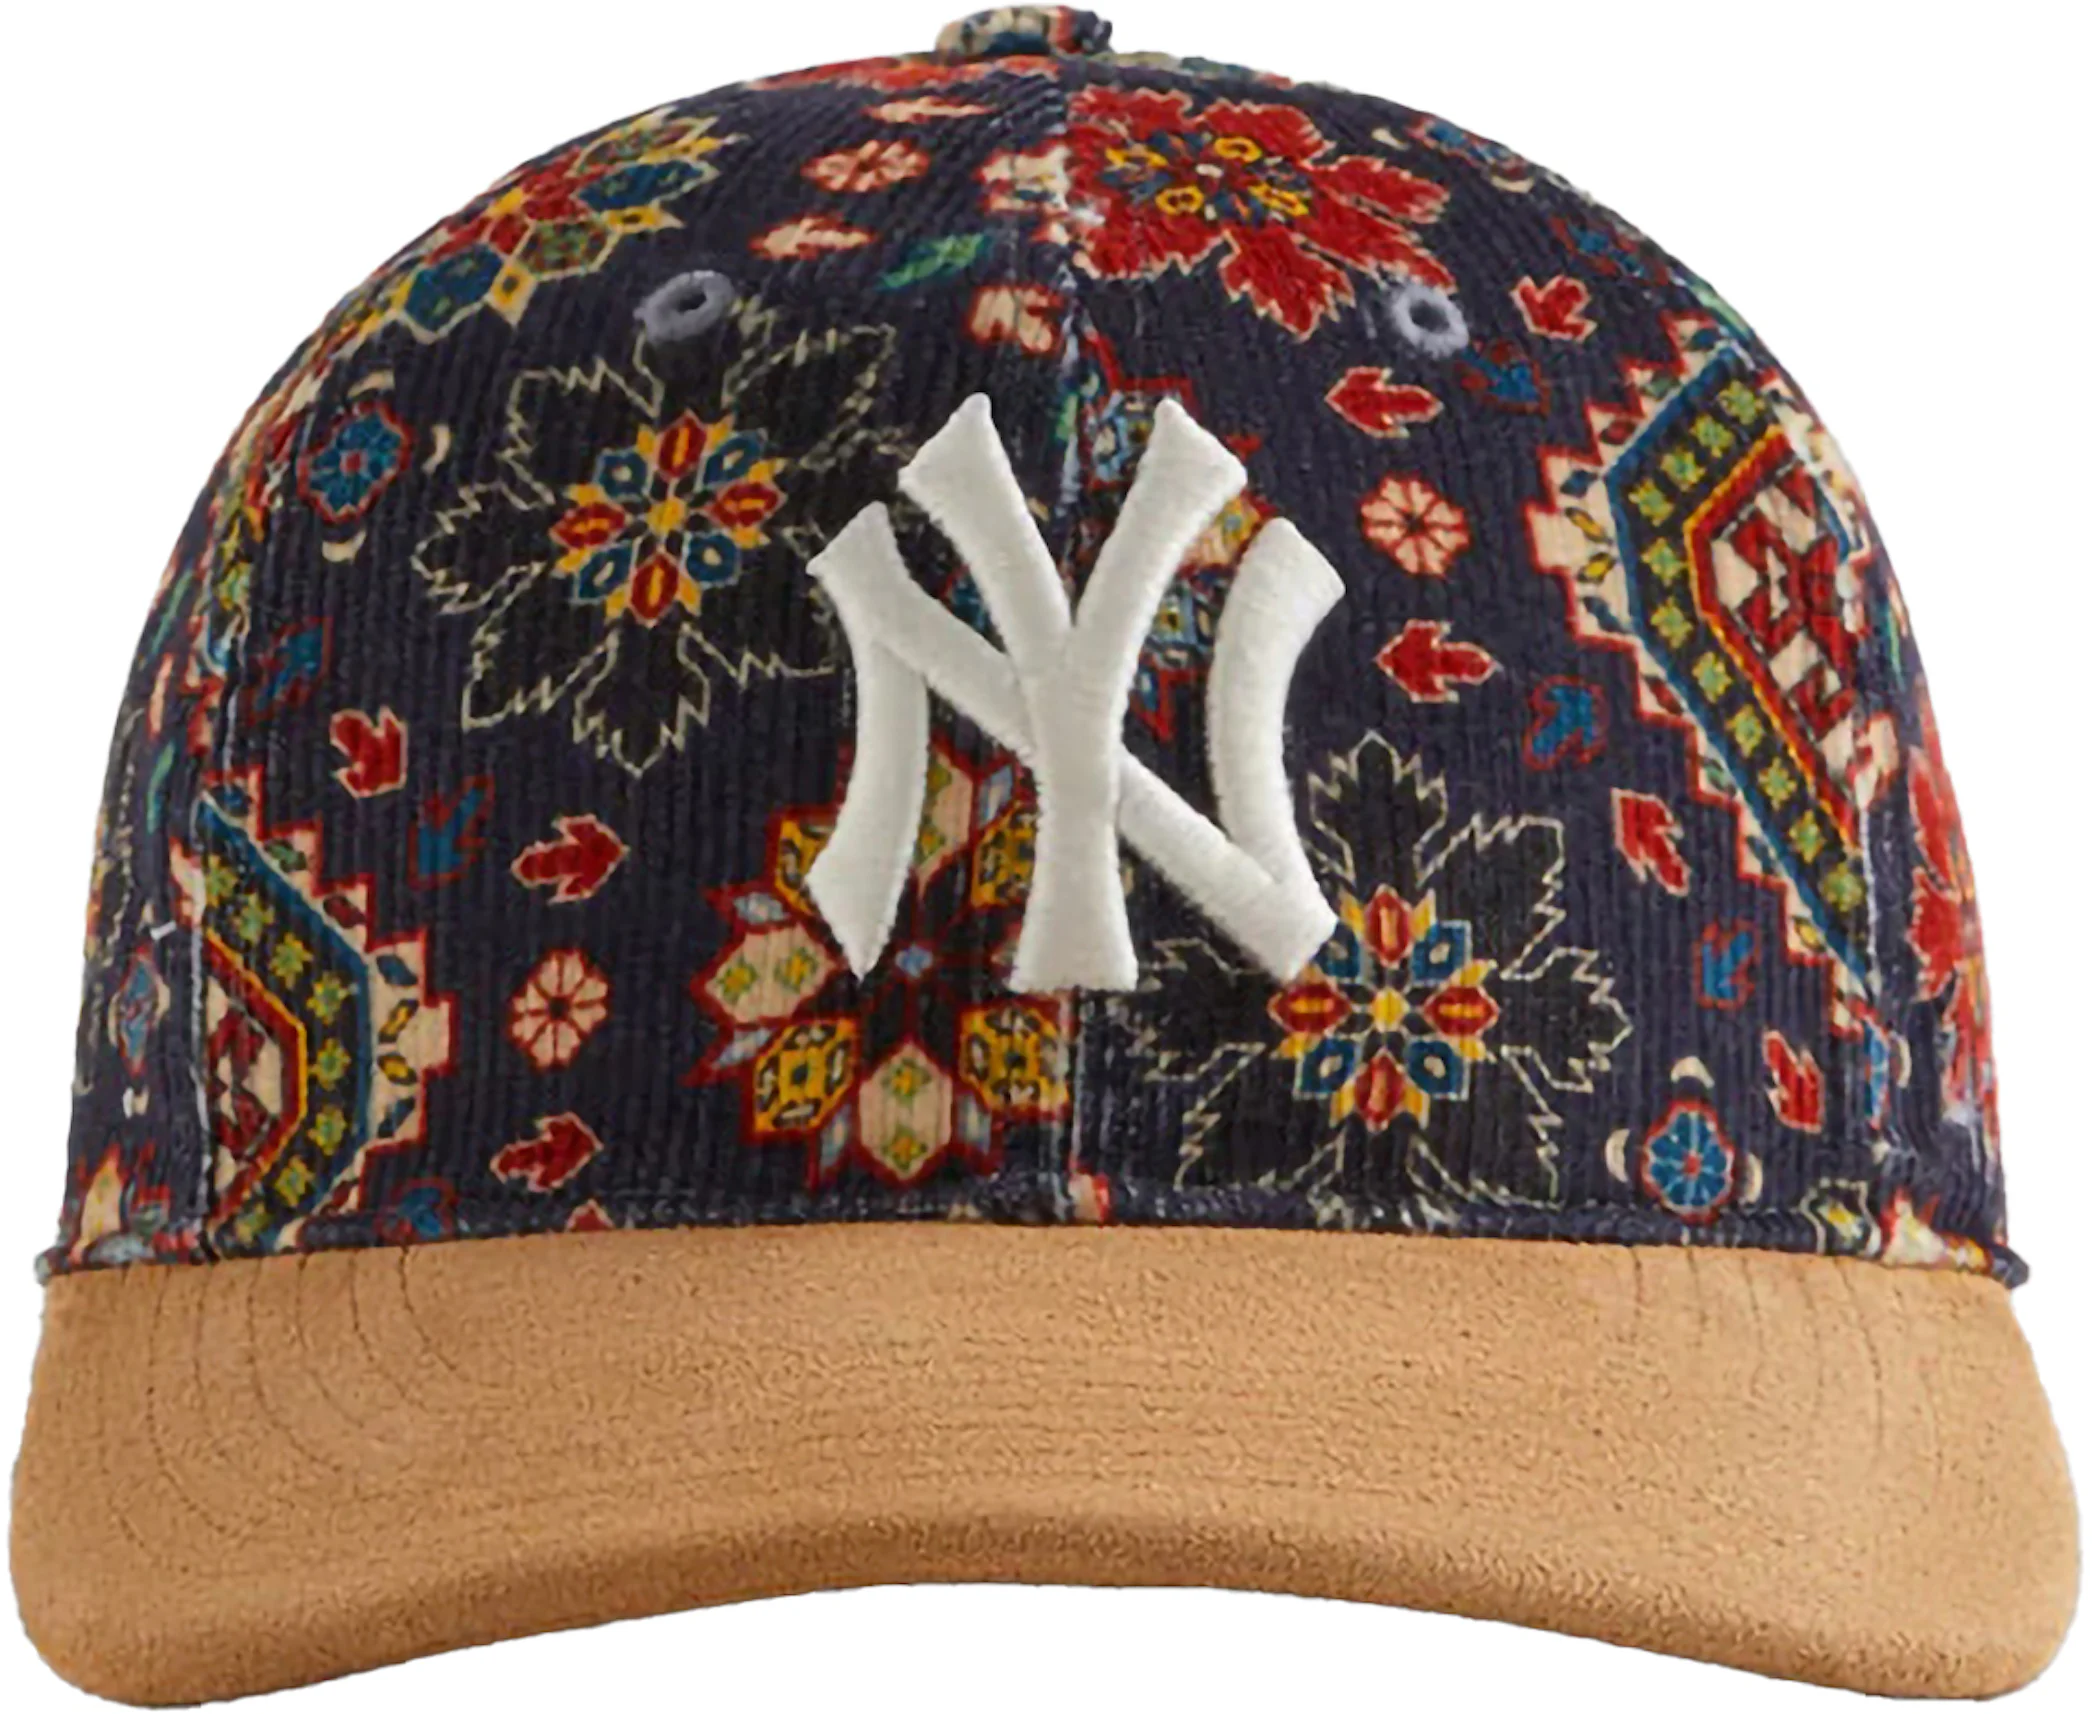 New York Giants Fitted Baseball Hat American Needle Black Orange Vintage NY